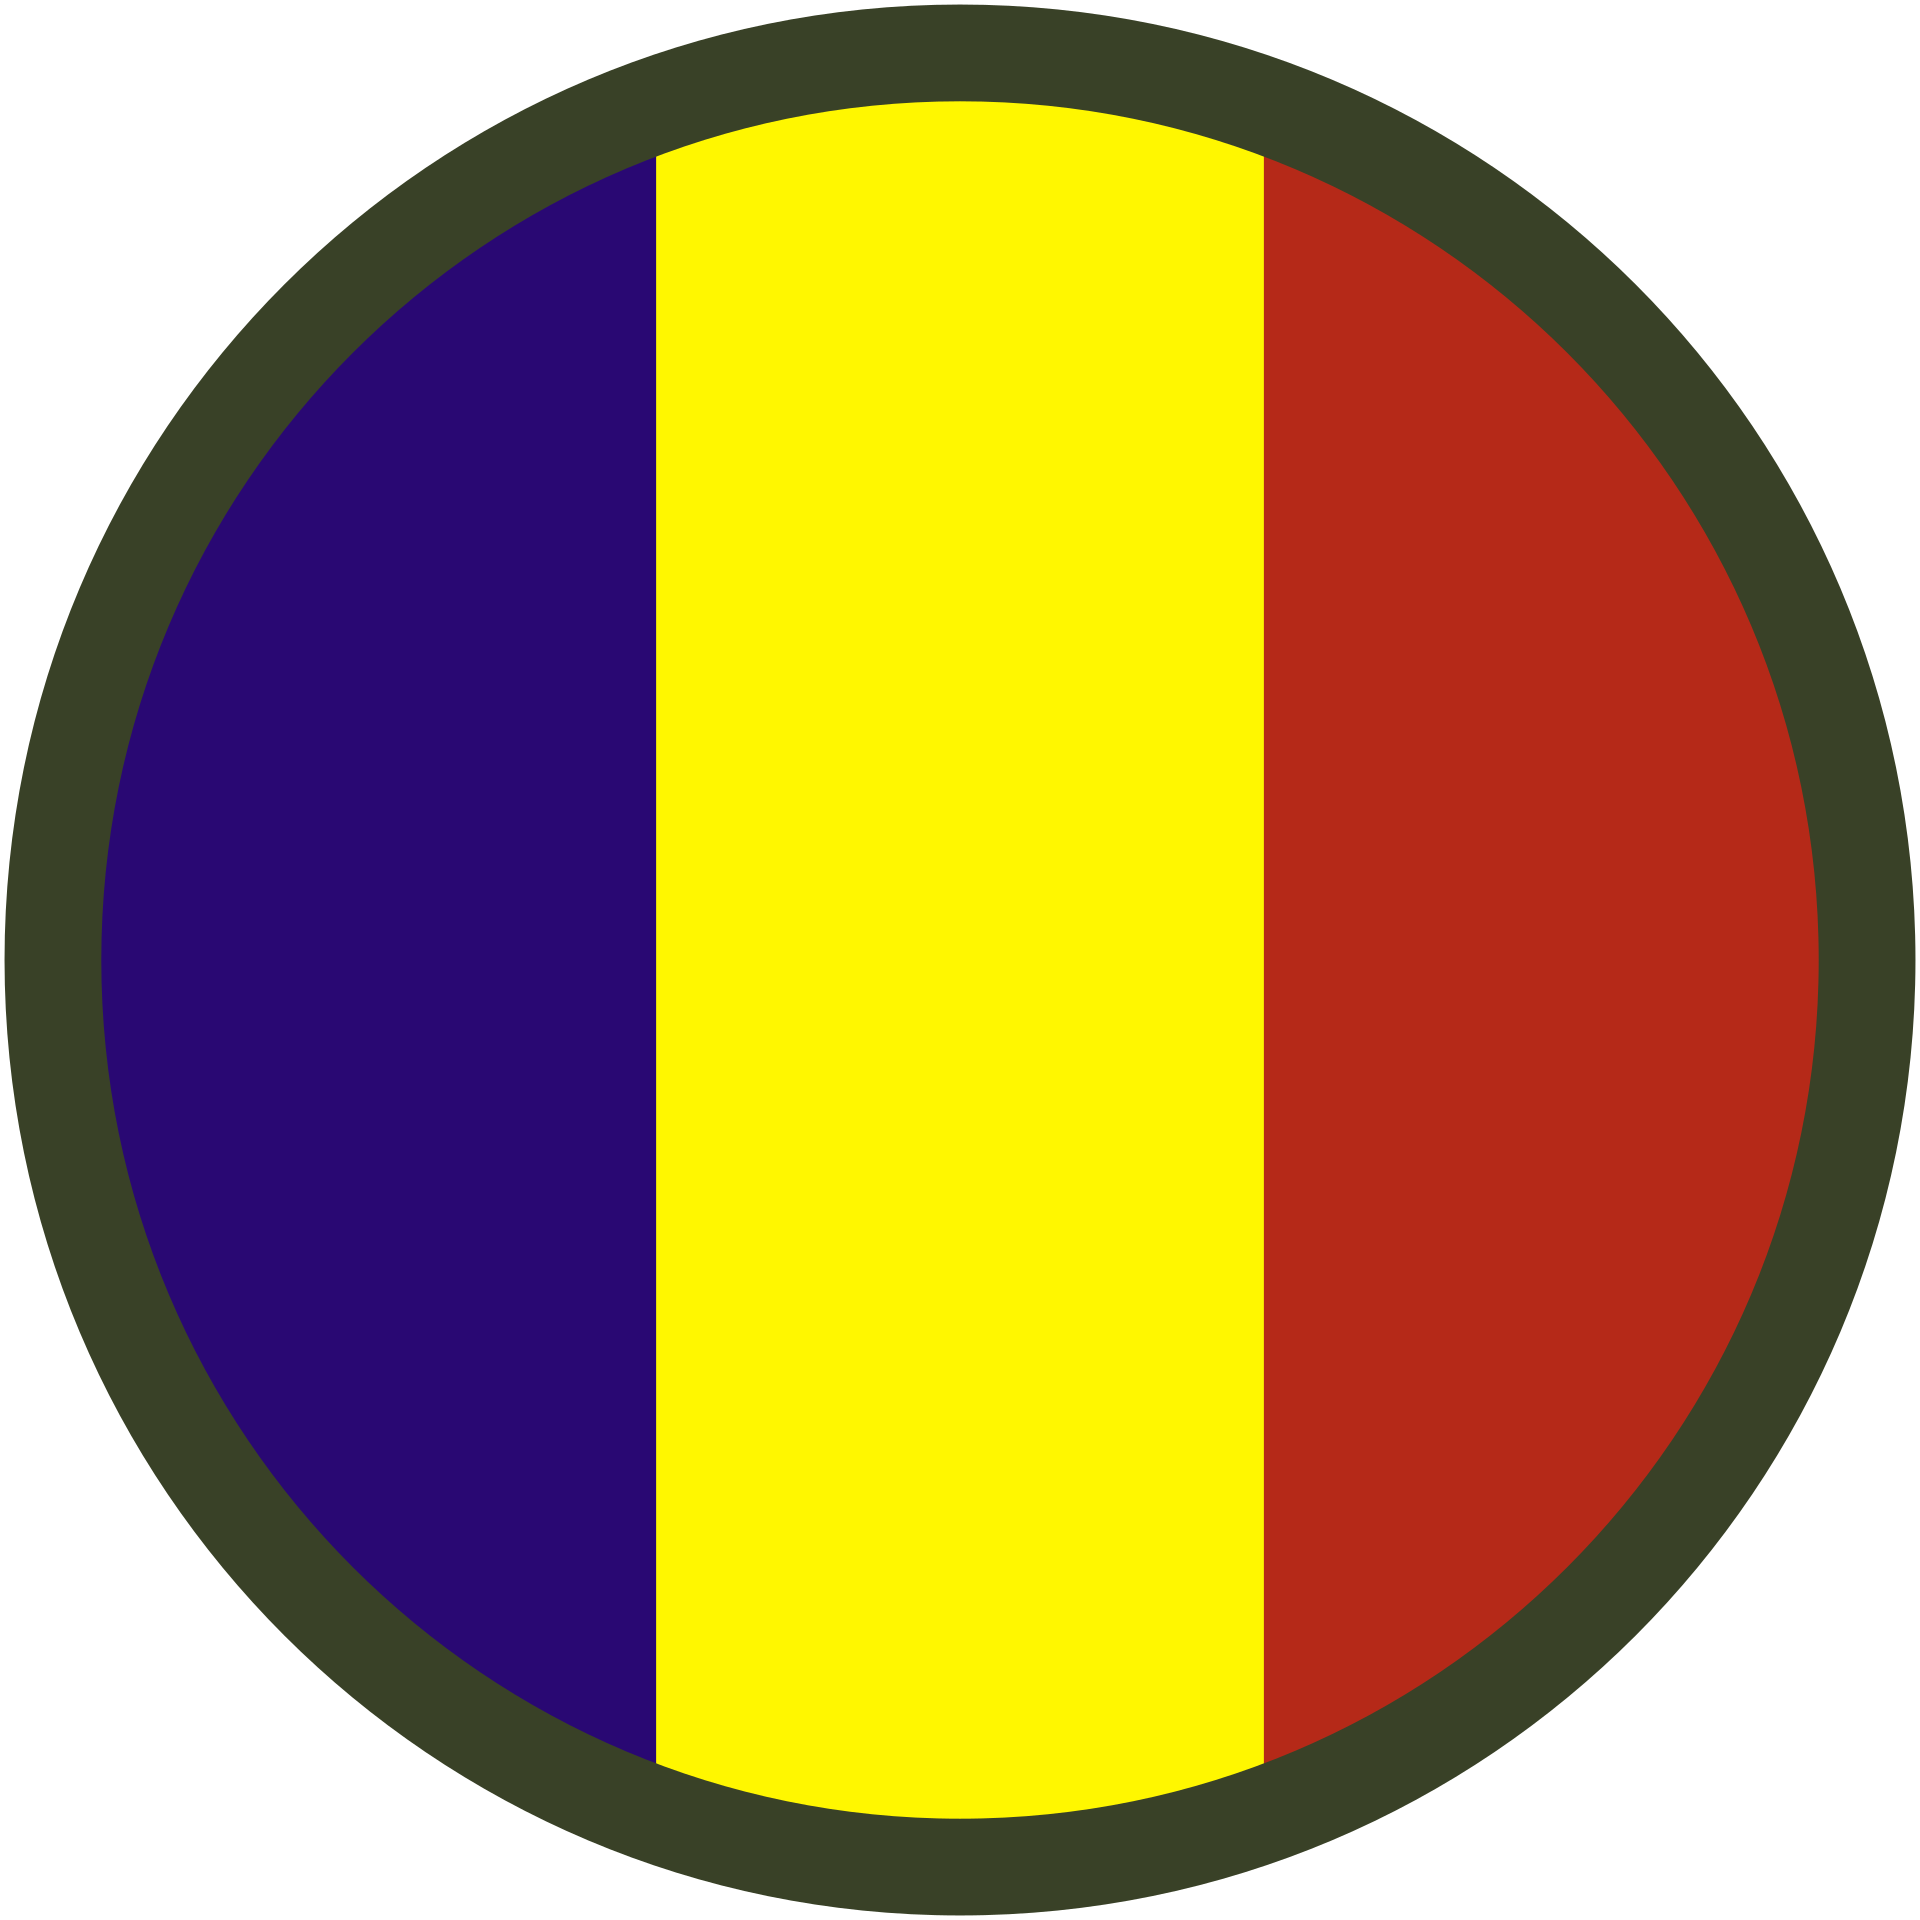 U.S. Army Training and Doctrine Command (TRADOC) logo